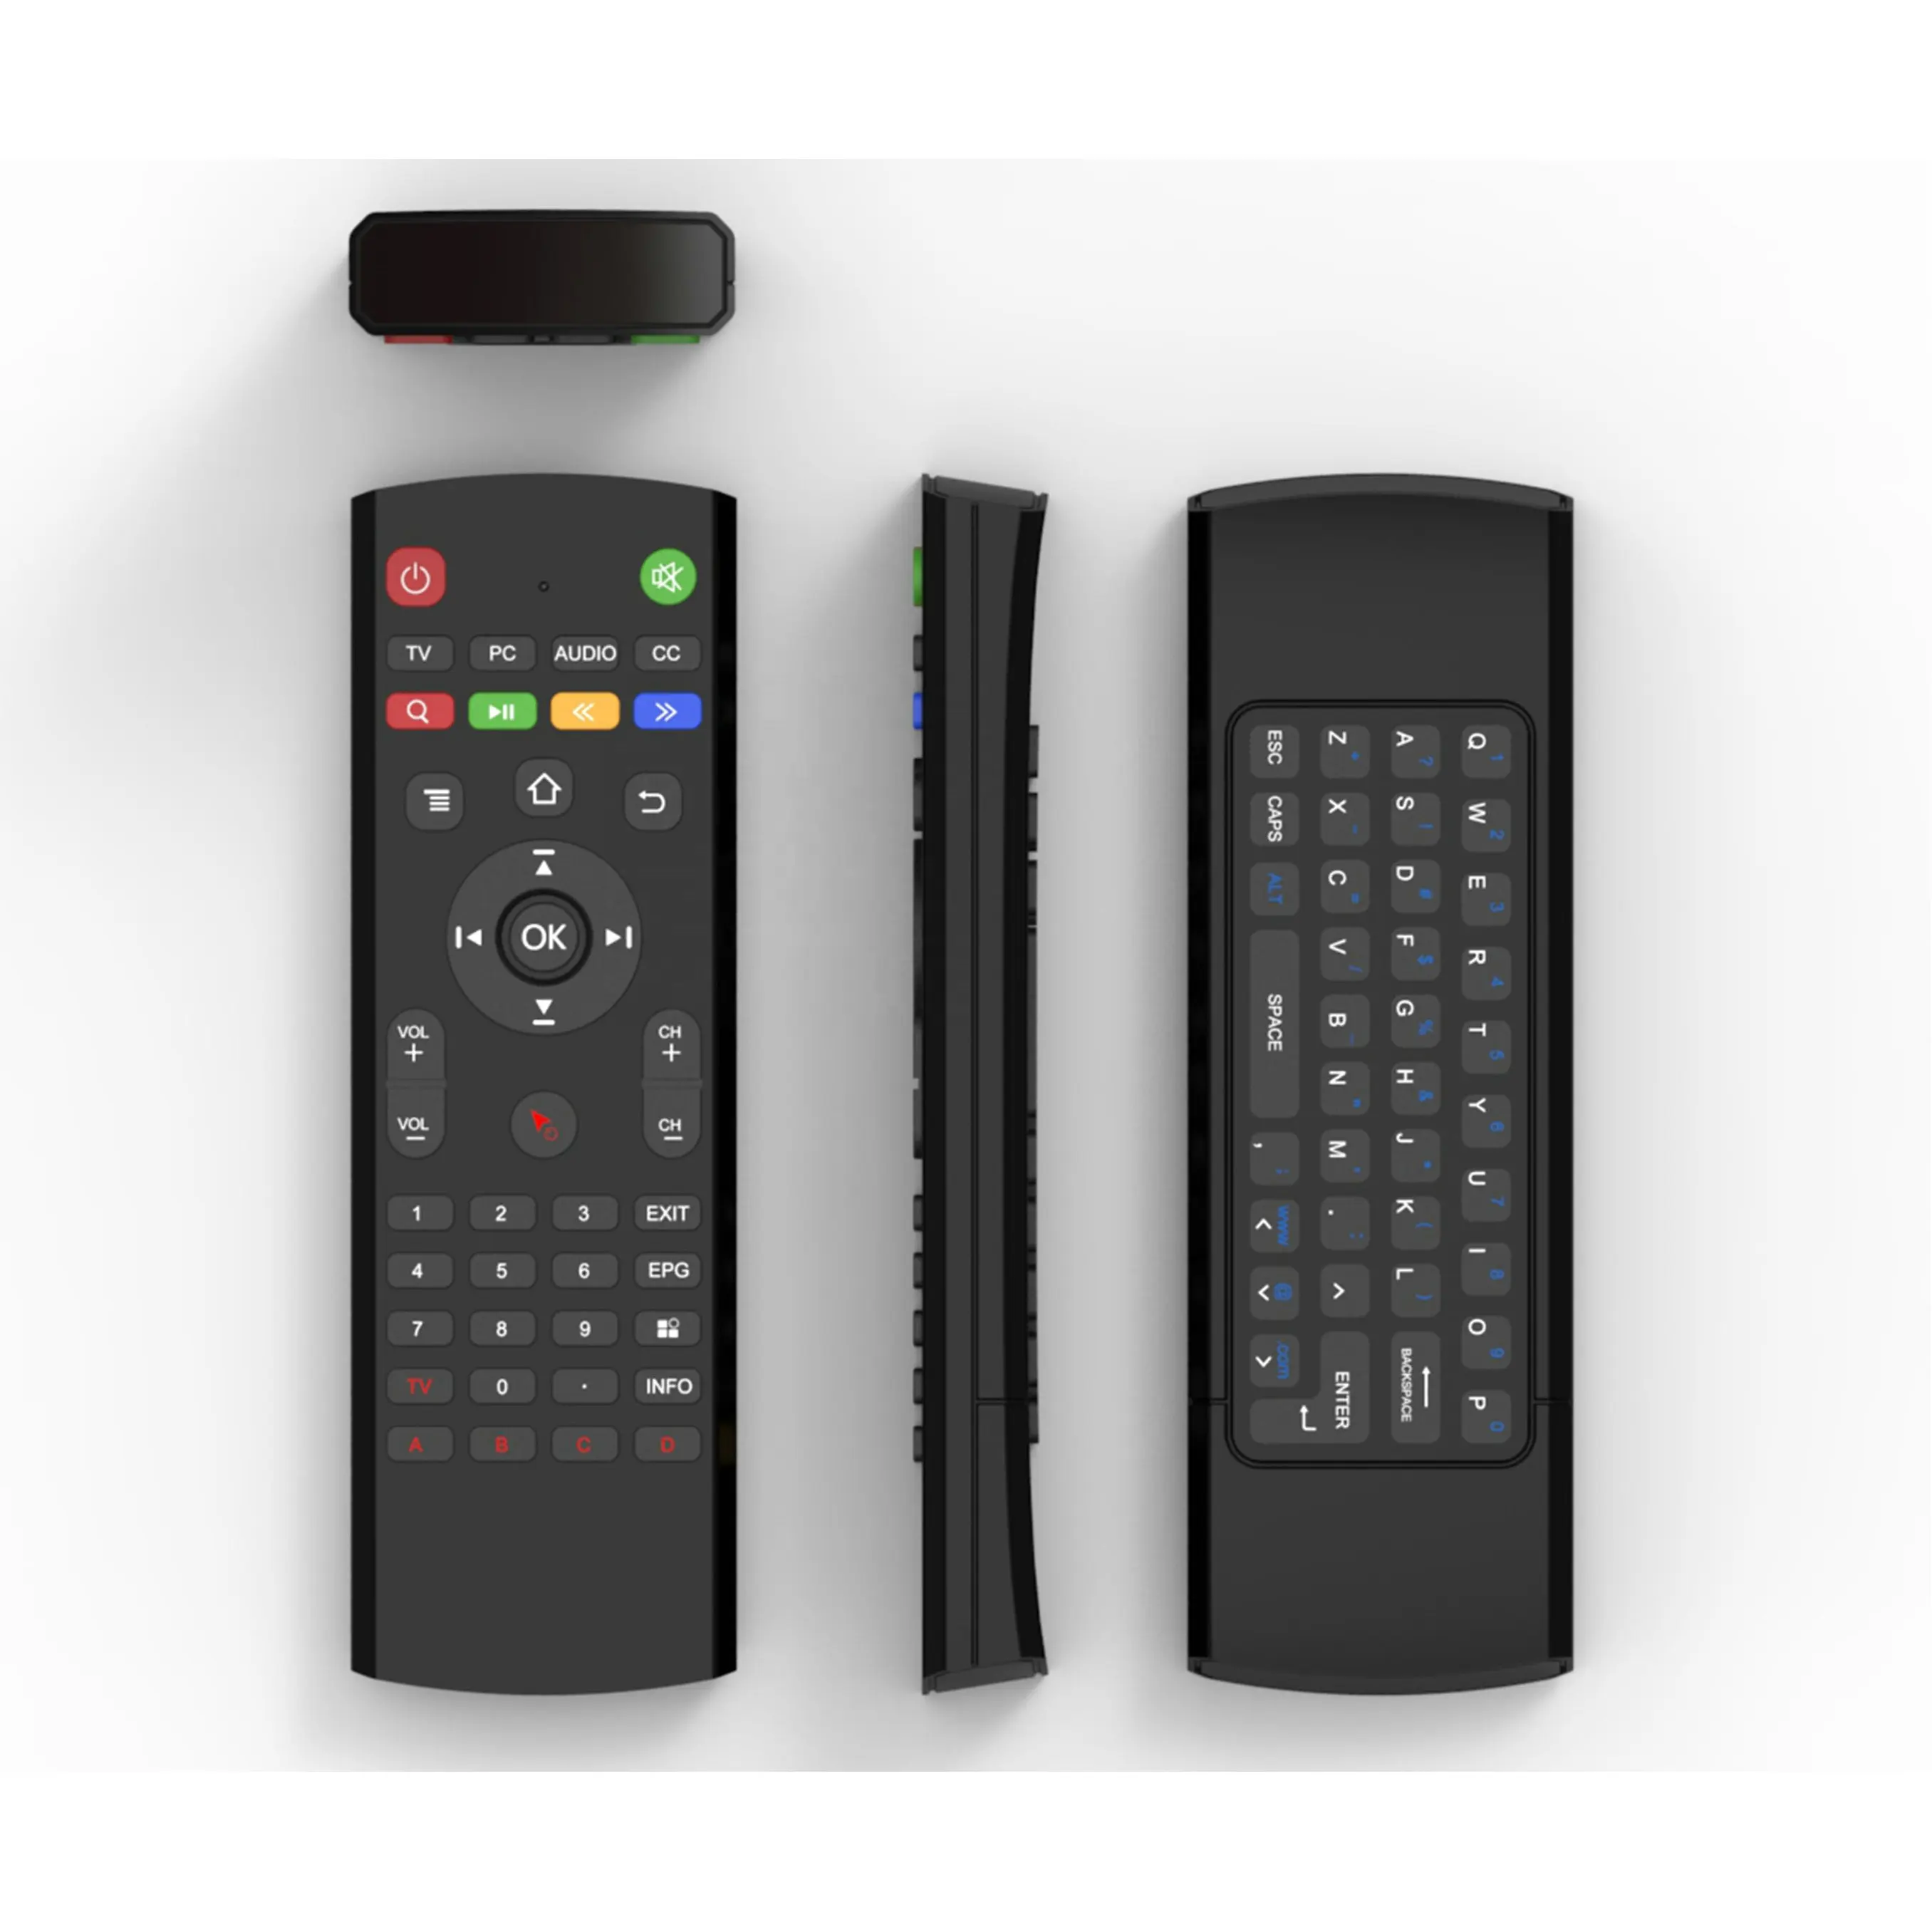 Mando a distancia Universal USB 2,4 GHz, control remoto con teclado Qwenty para Android TV ble